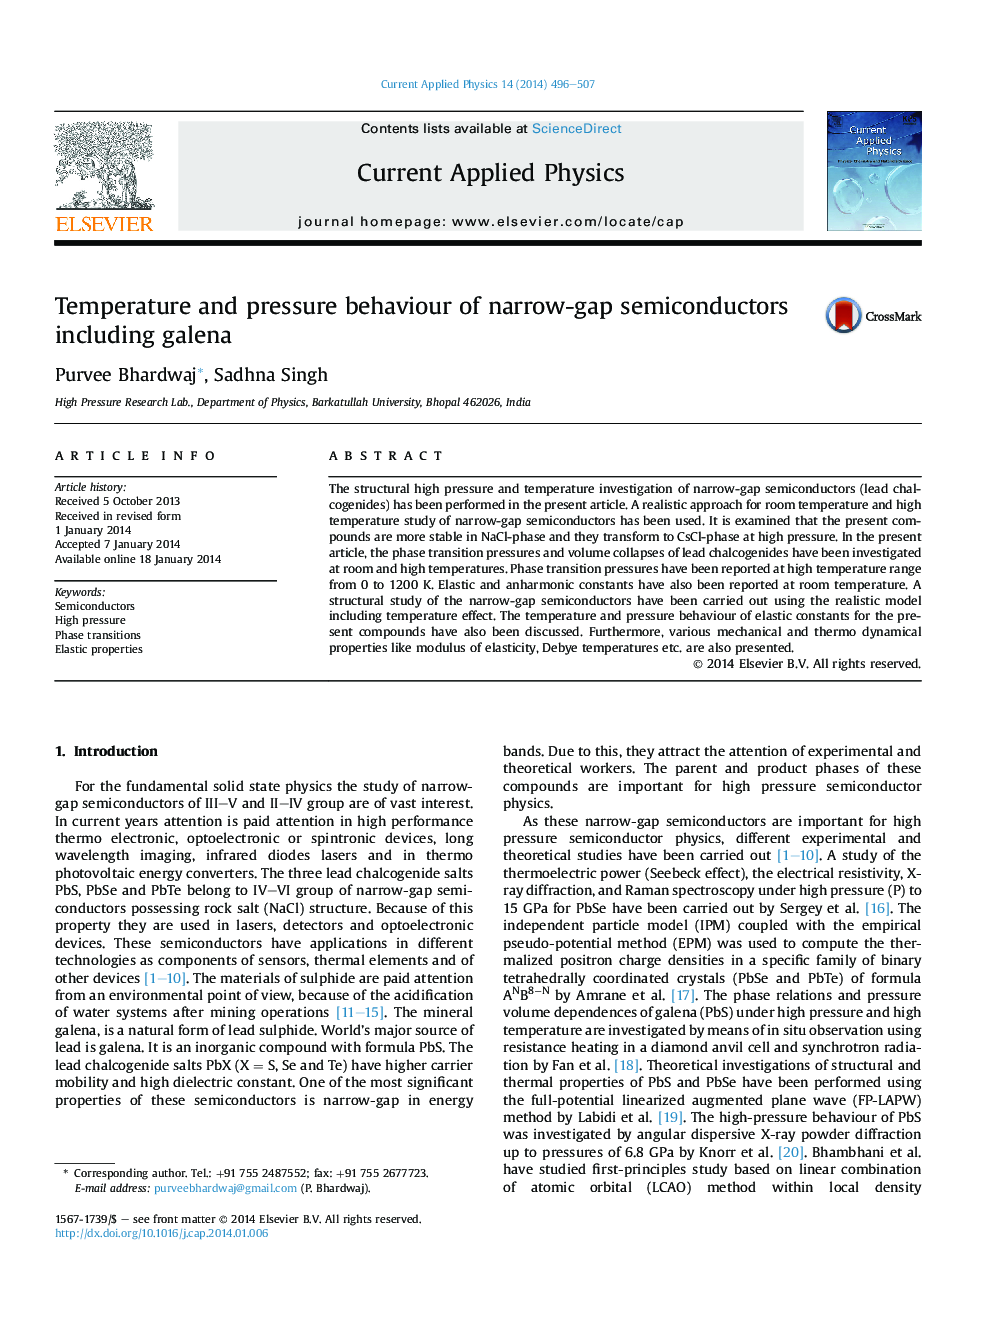 Temperature and pressure behaviour of narrow-gap semiconductors including galena